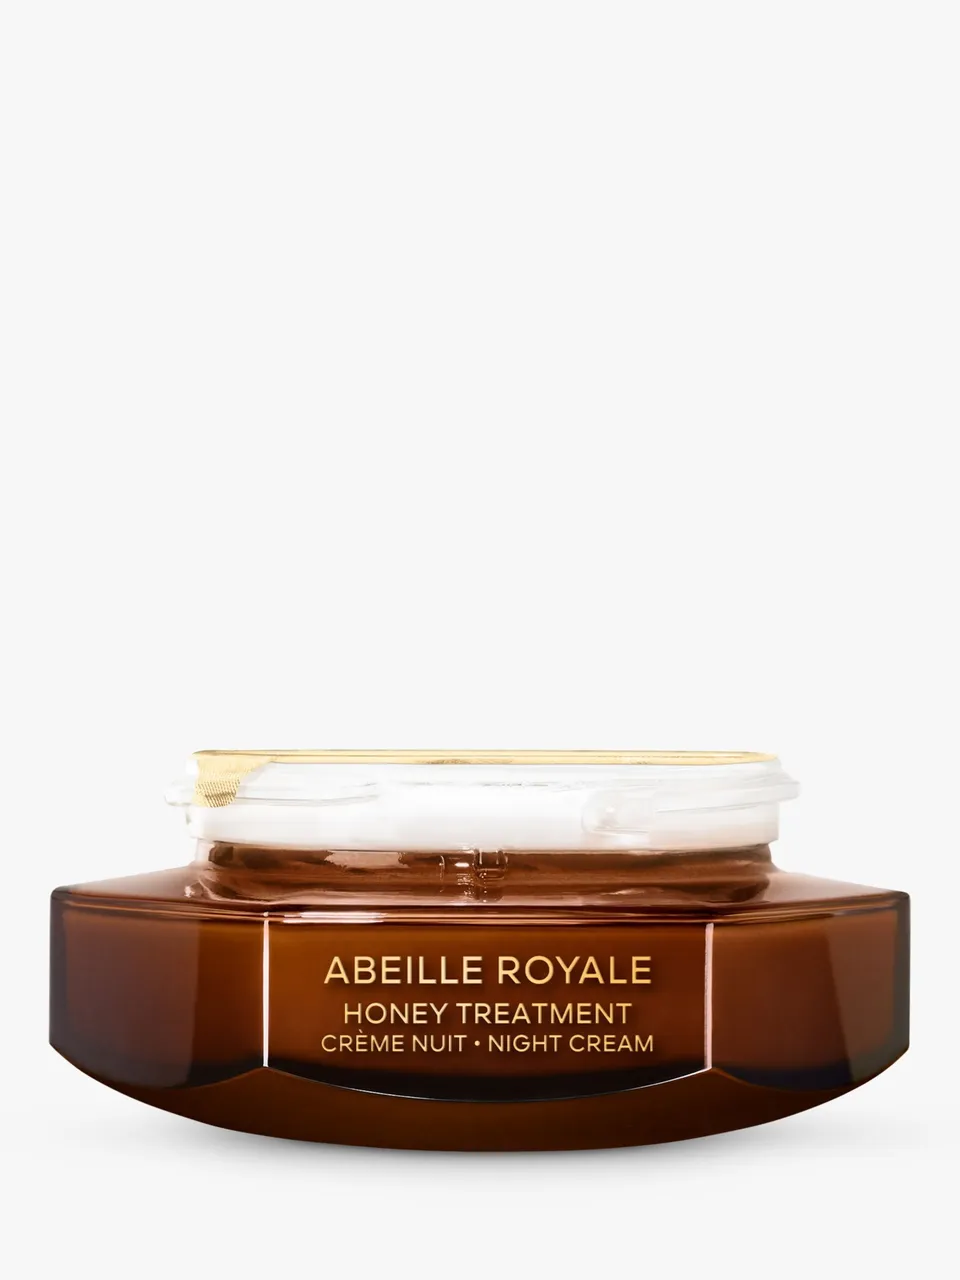 Guerlain Abeille Royale Honey Treatment Night Cream Refill, 50ml - Unisex - Size: 50ml